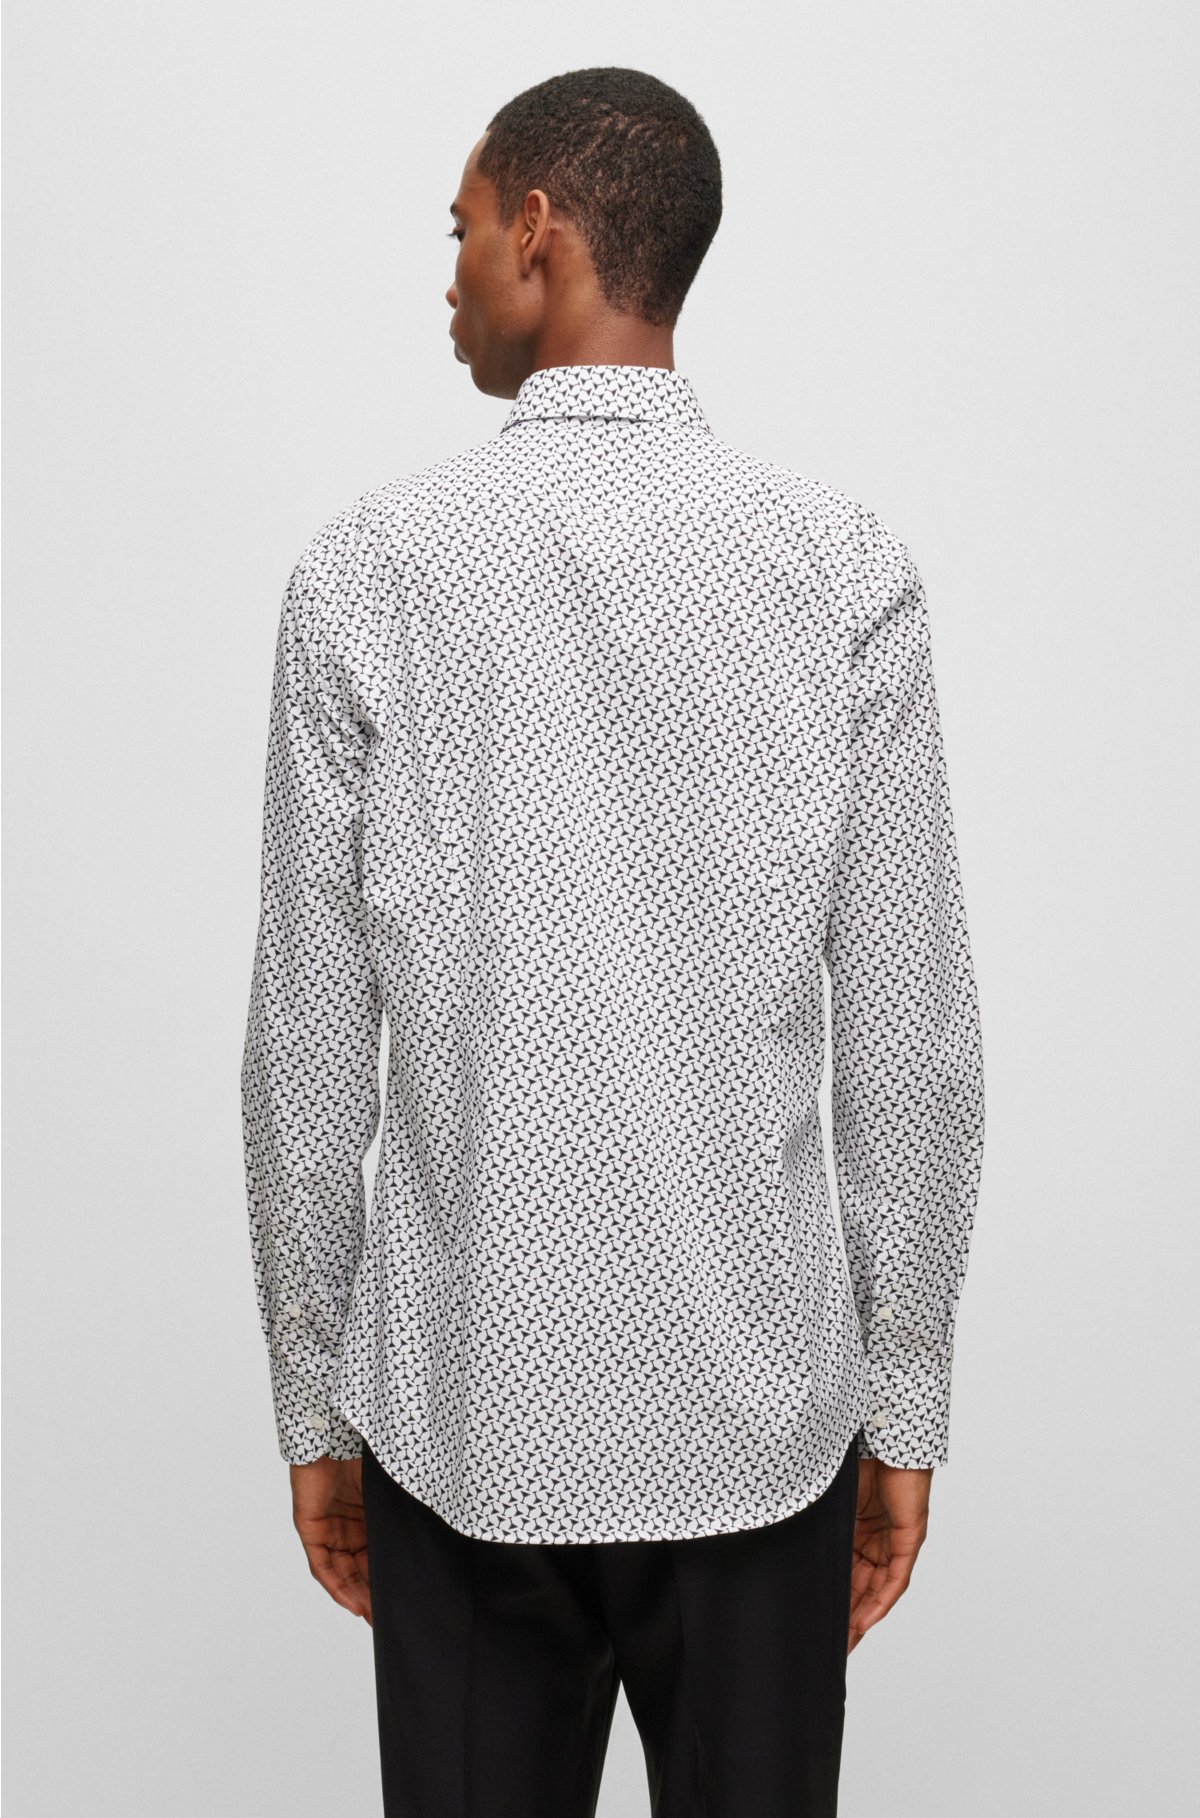 Slim-fit shirt in printed stretch cotton, Black